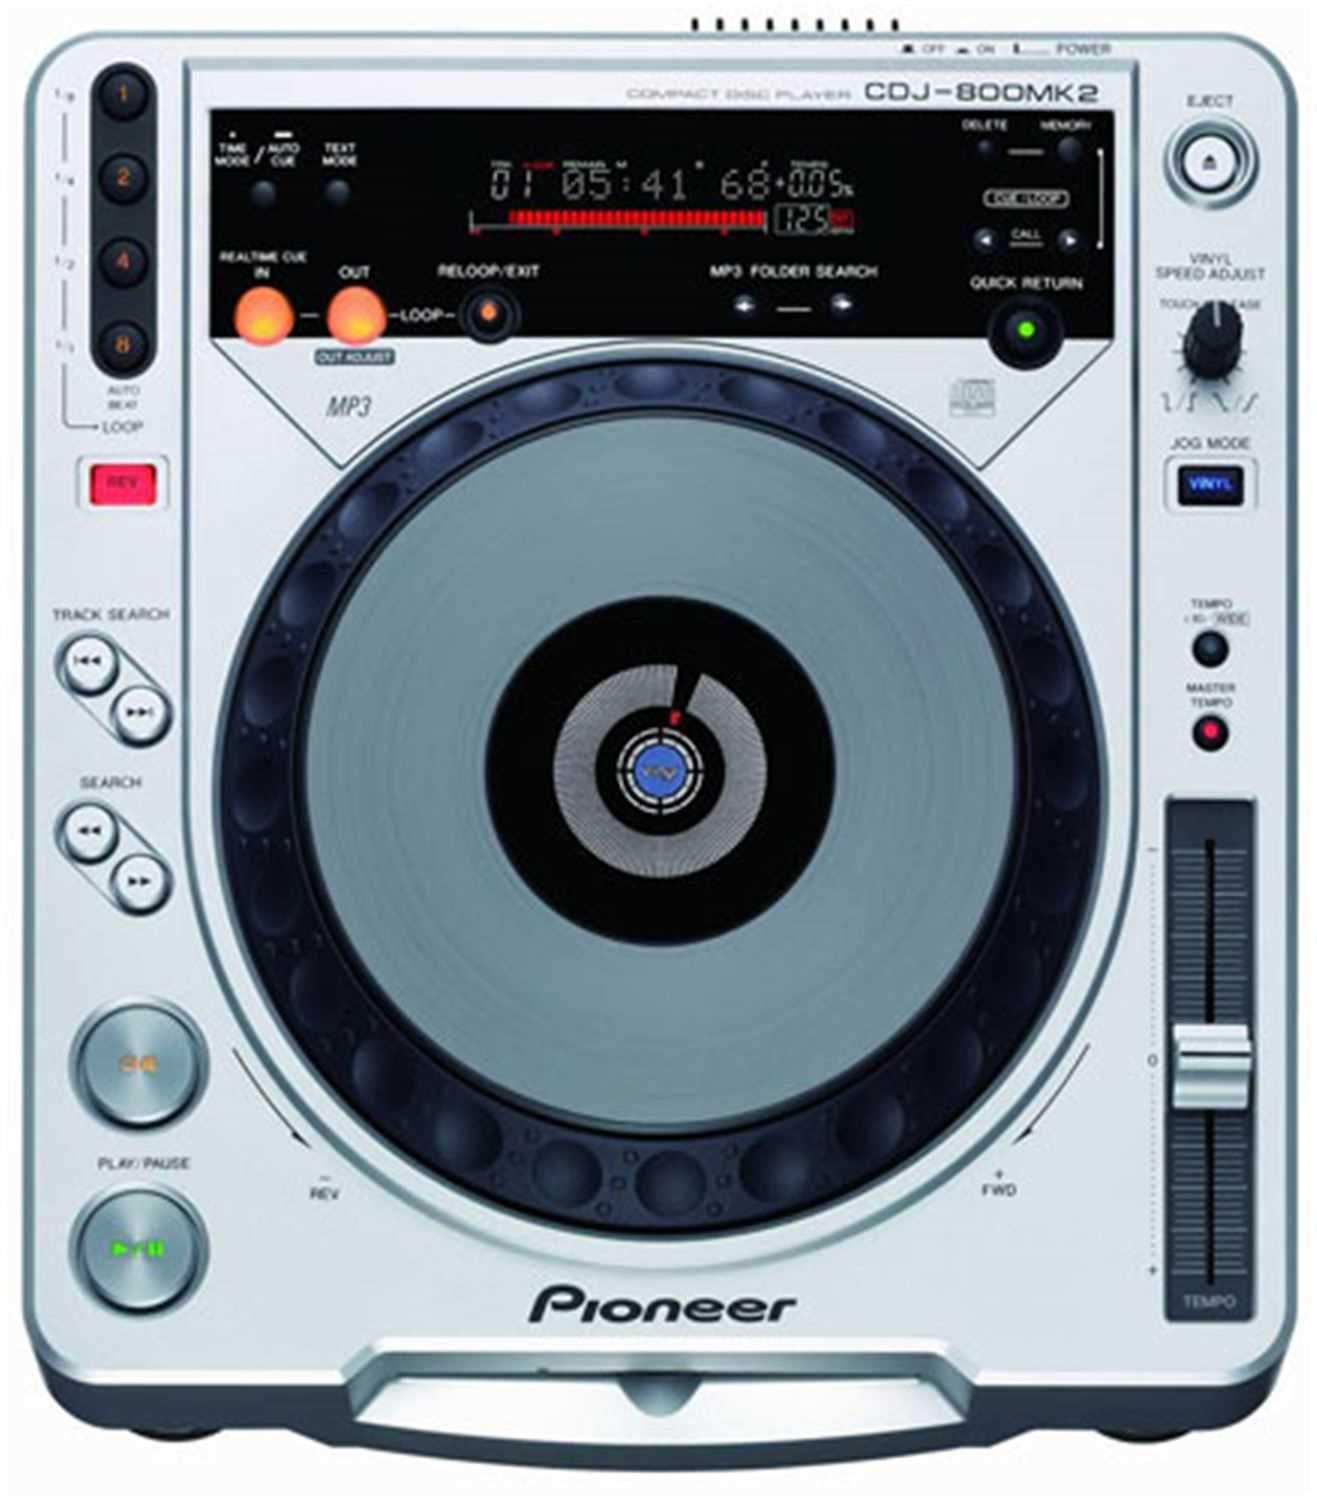 Pioneer DJ CDJ-800MK2 Table Top CD Player With MP3